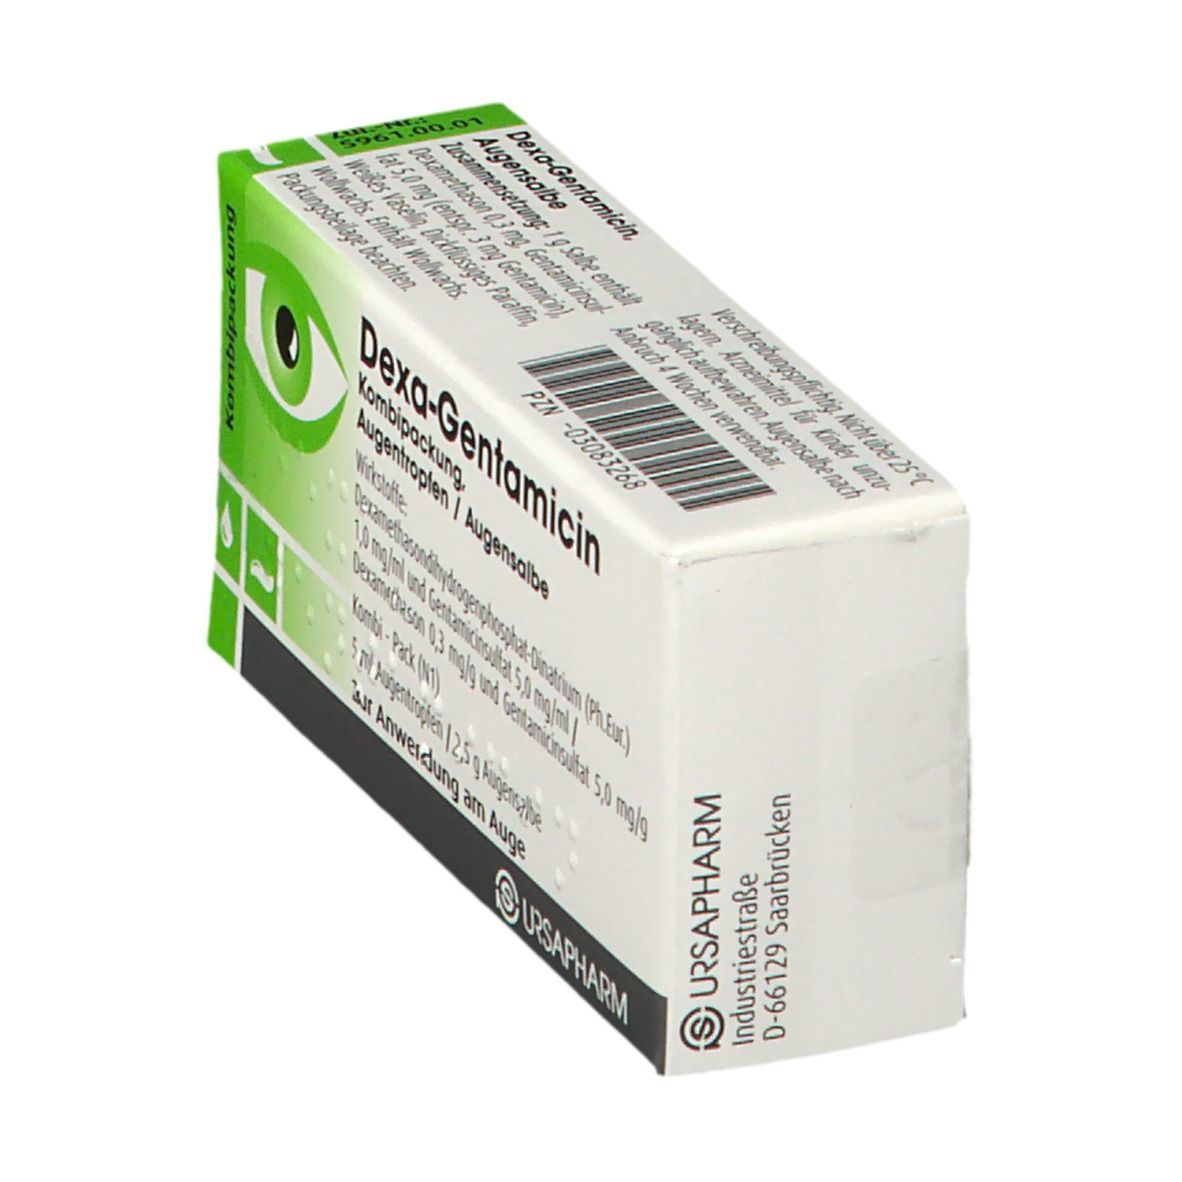 Dexa-Gentamicin Kombipackung AUgentropfen + Augensalbe